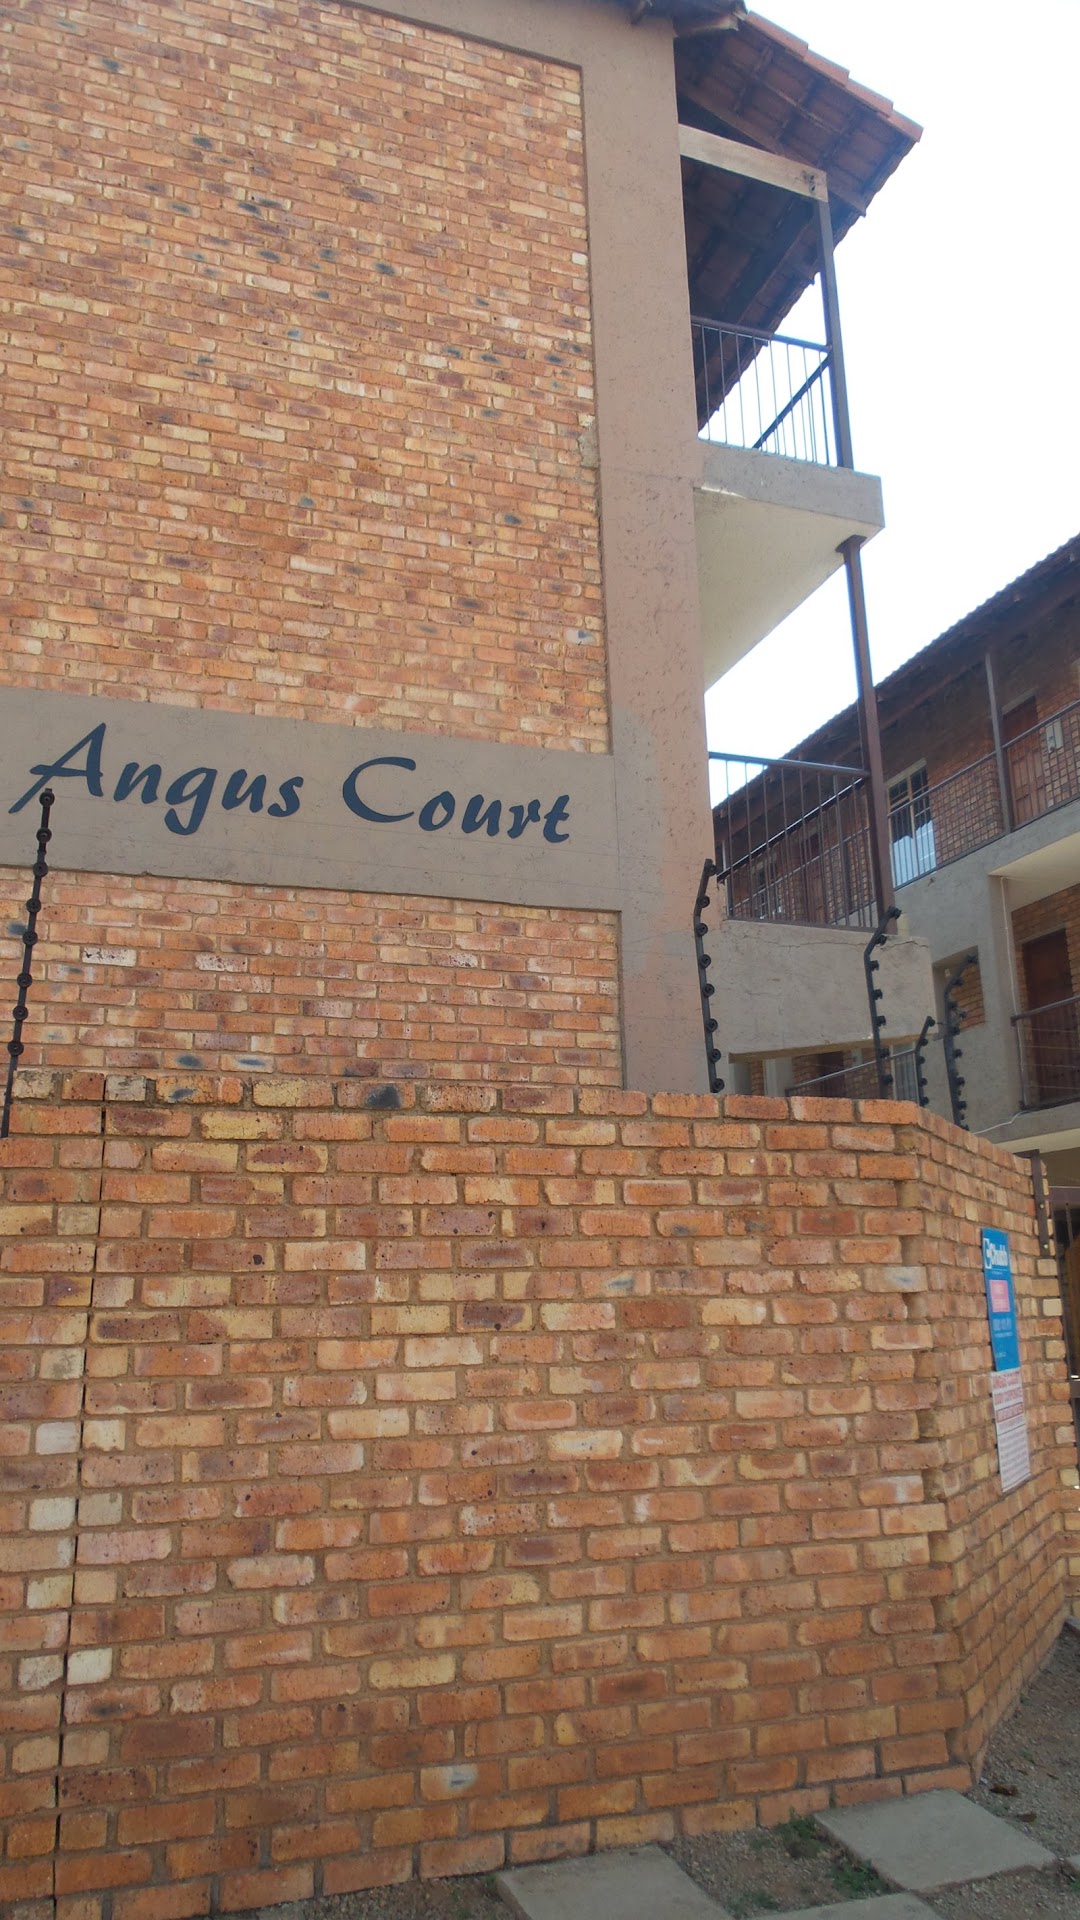 Angus Court.